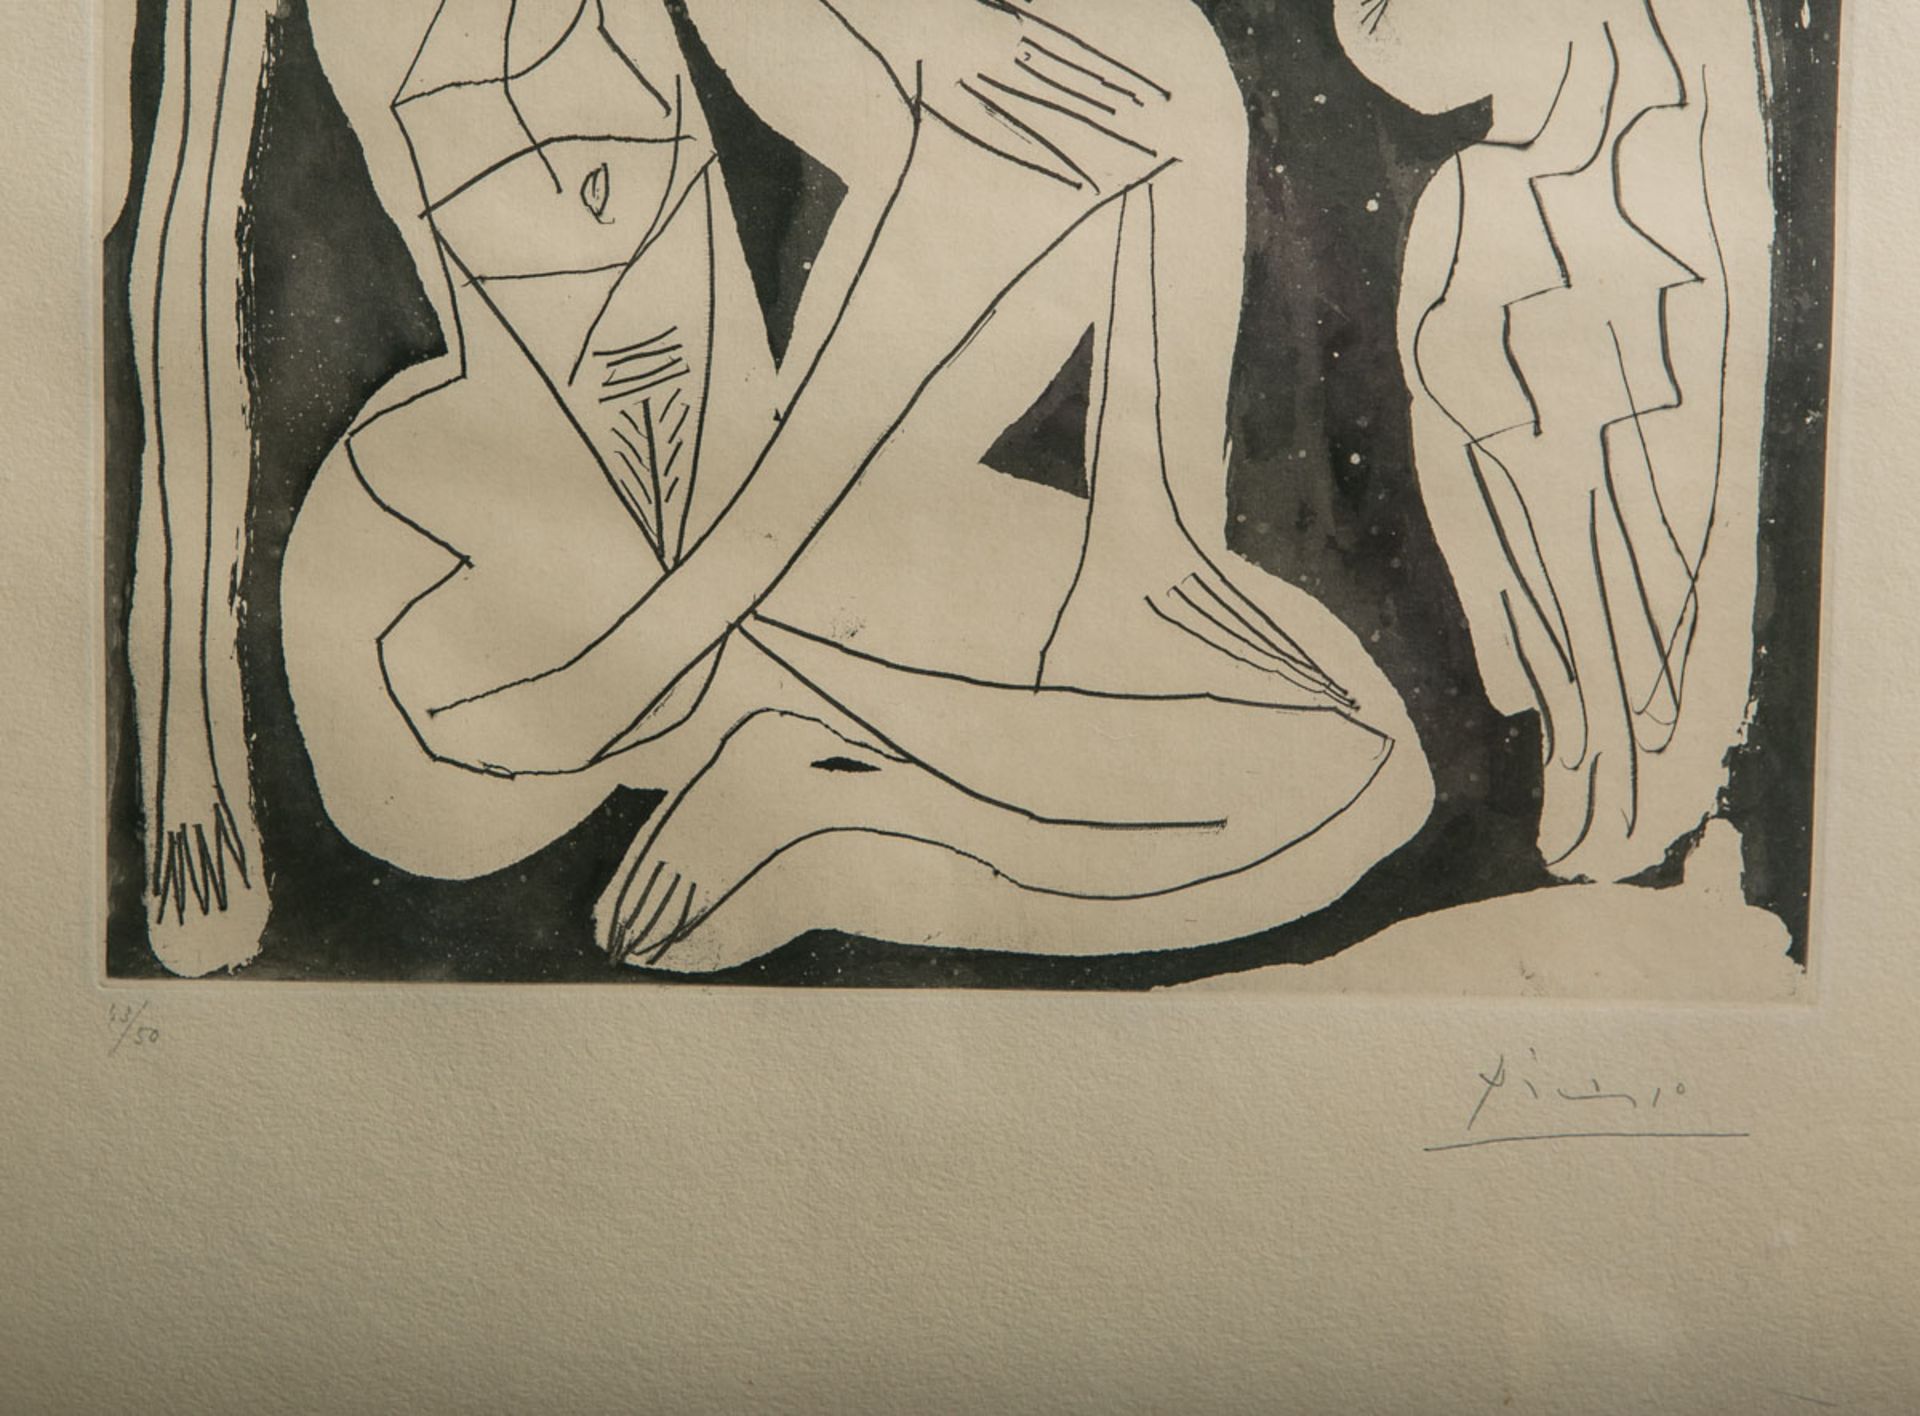 Picasso, Pablo (1881 - 1973), "Le Modele" (1965) - Image 2 of 2